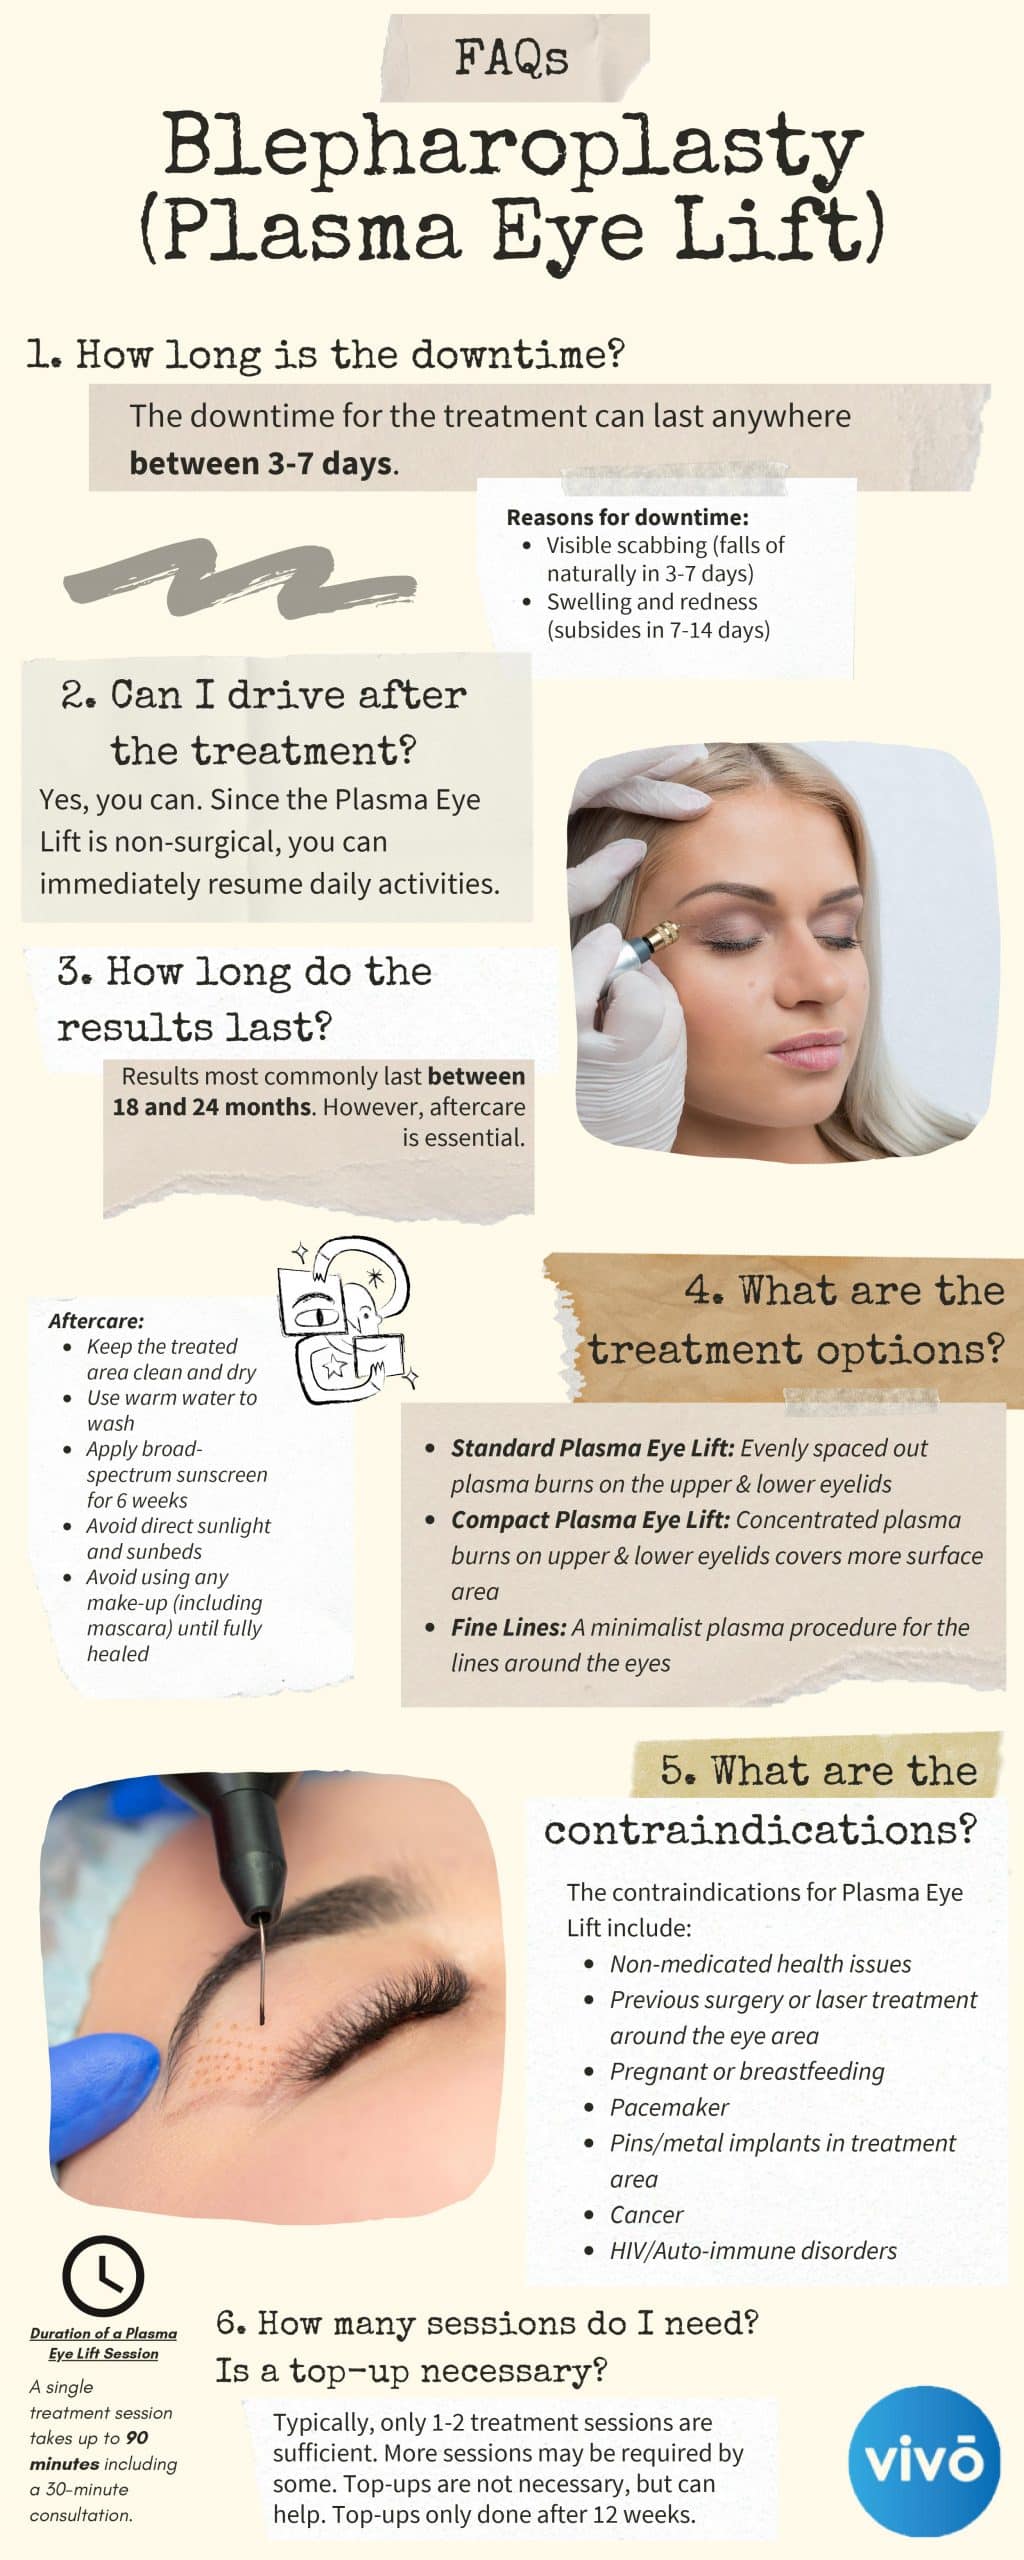 Blepharoplasty (Plasma Eye Lift) Infographic